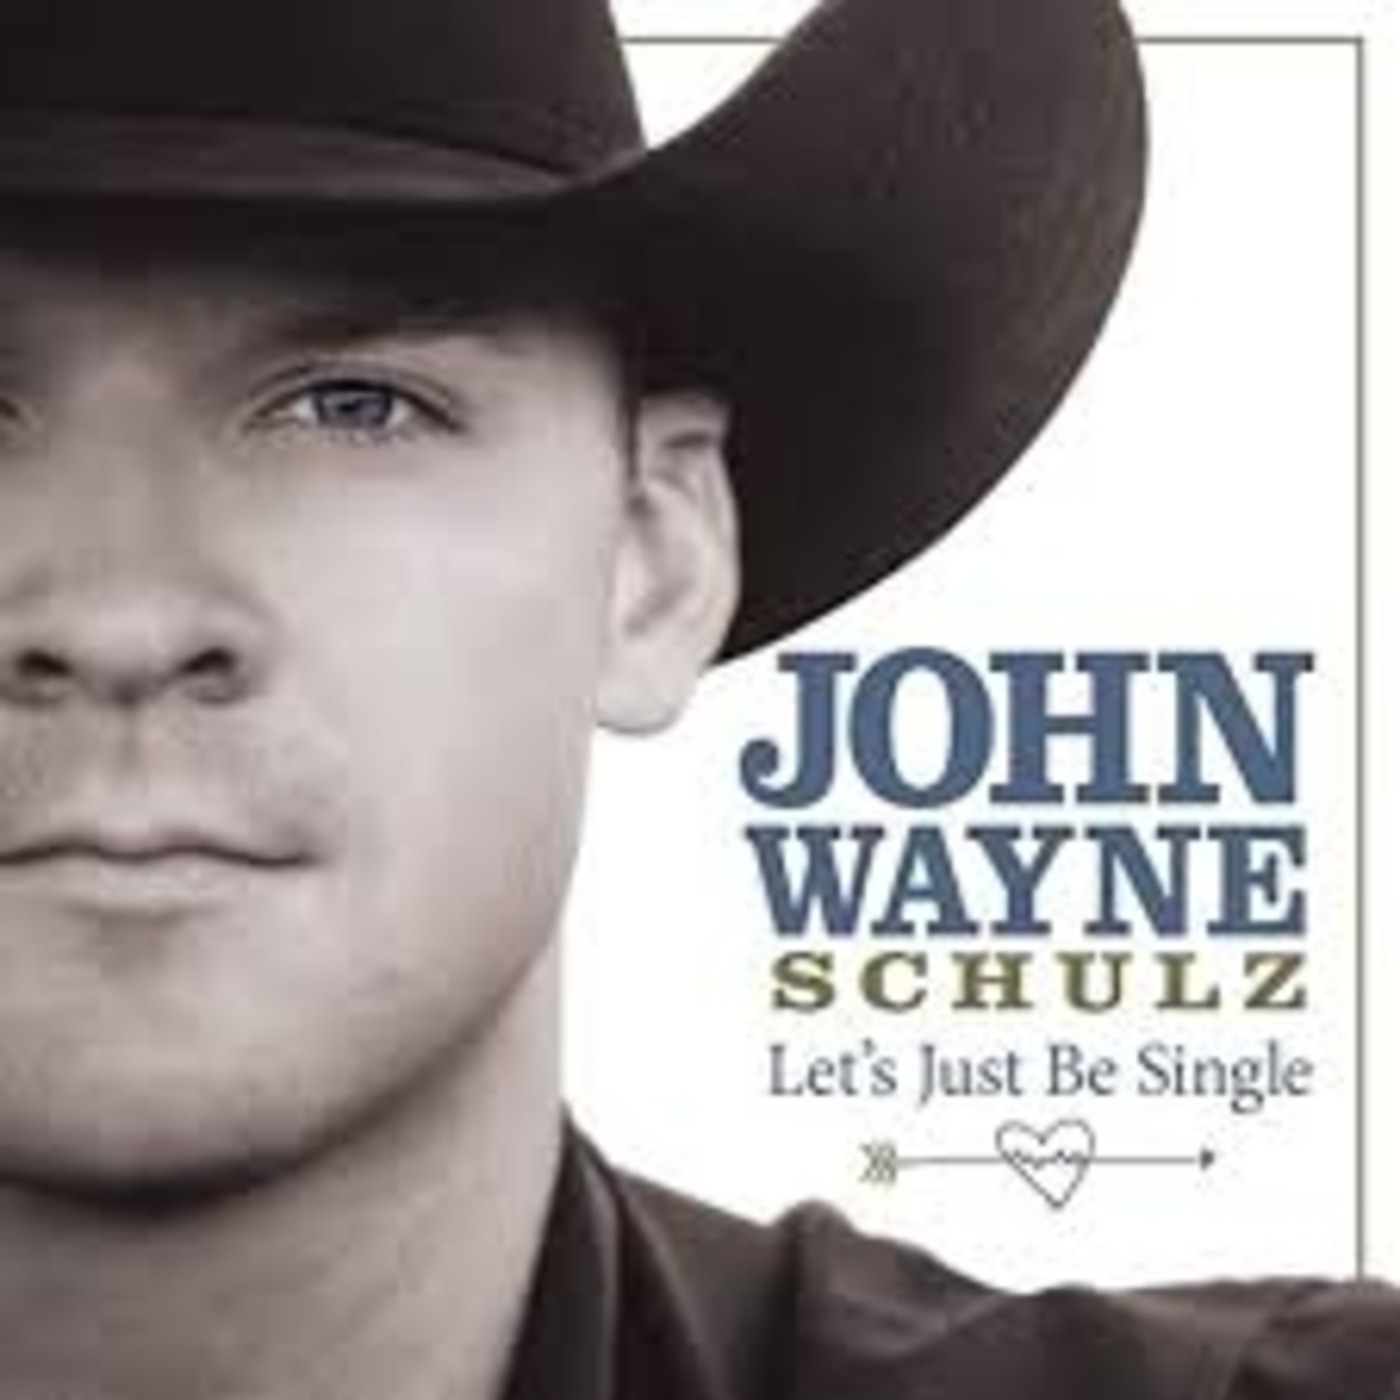 Let's Just Be Single by John Wayne Schulz